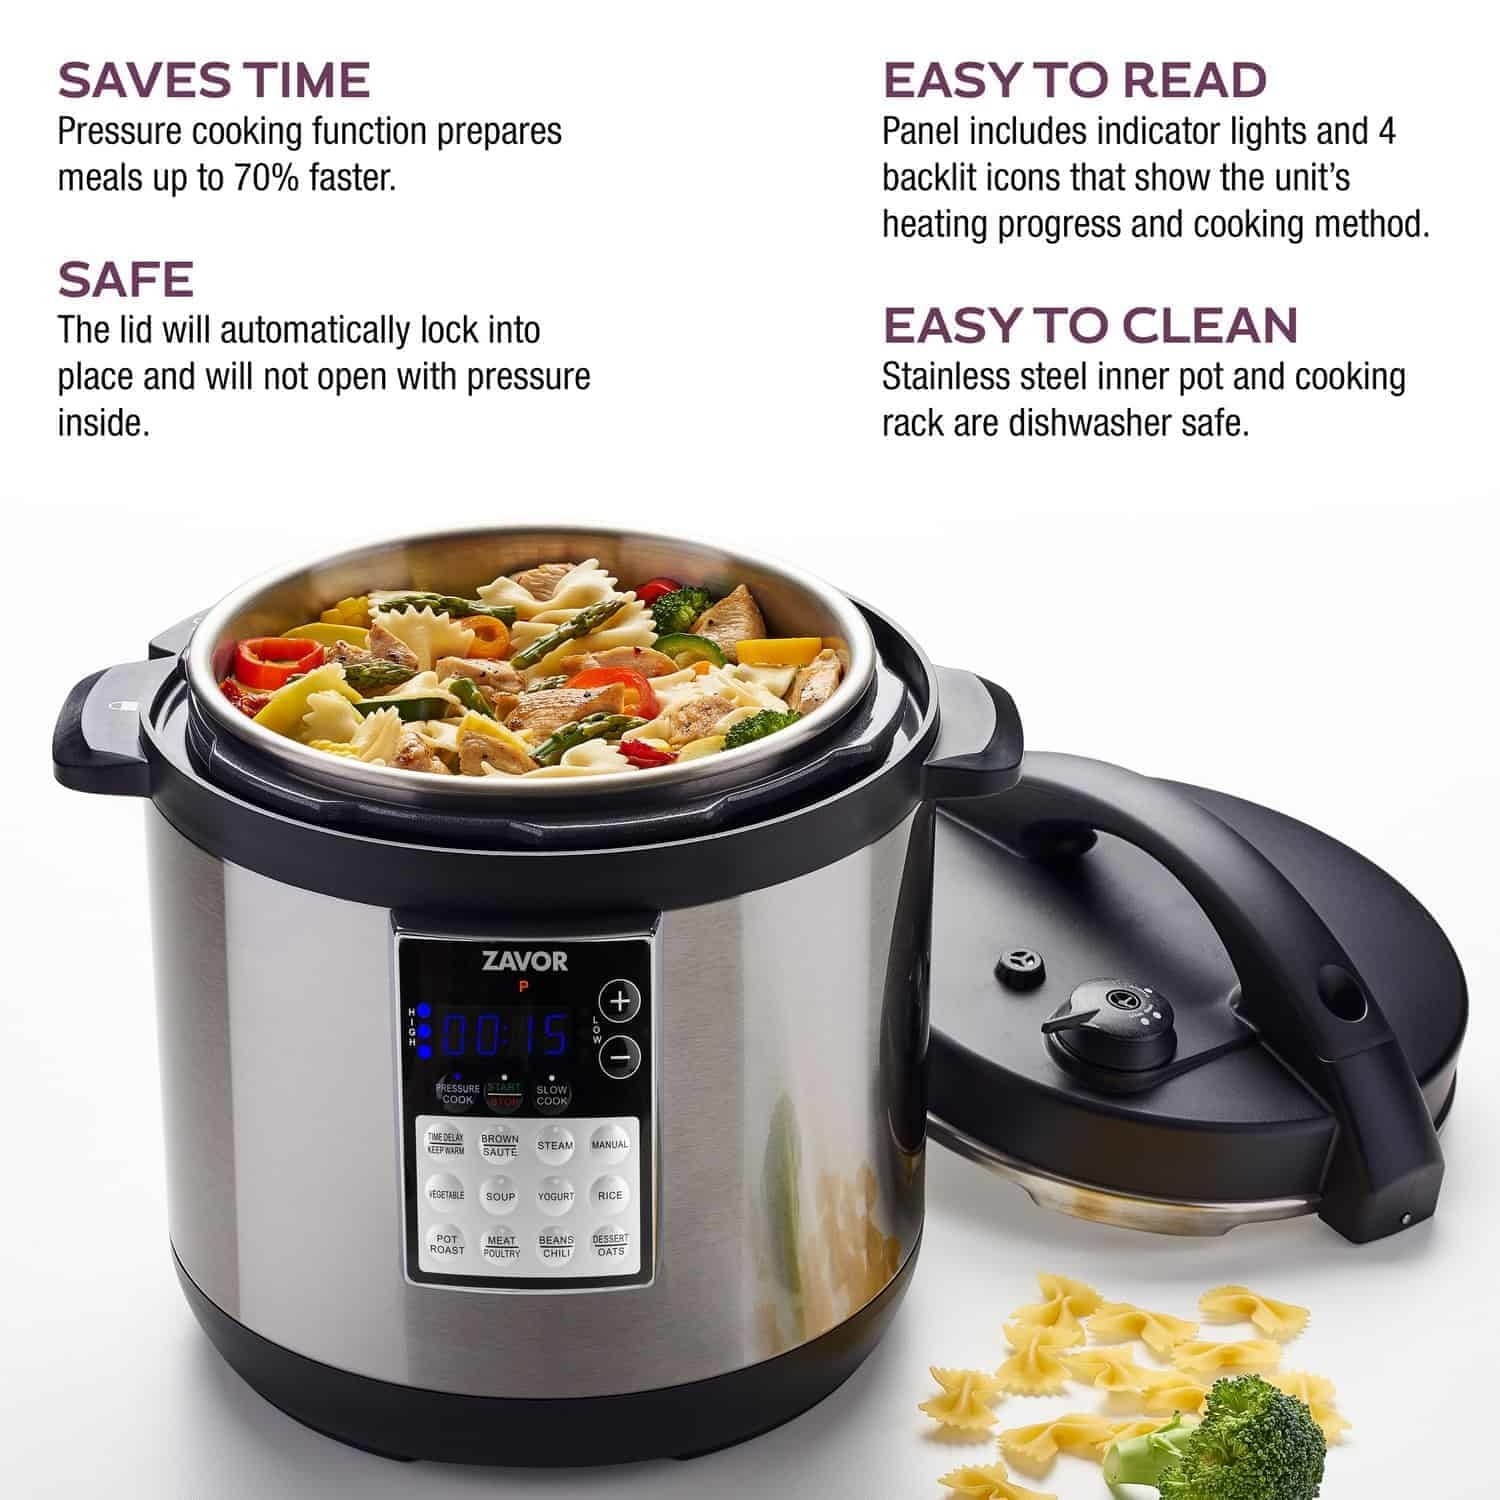 Cuisinart 6-Quart High Pressure Multicooker 